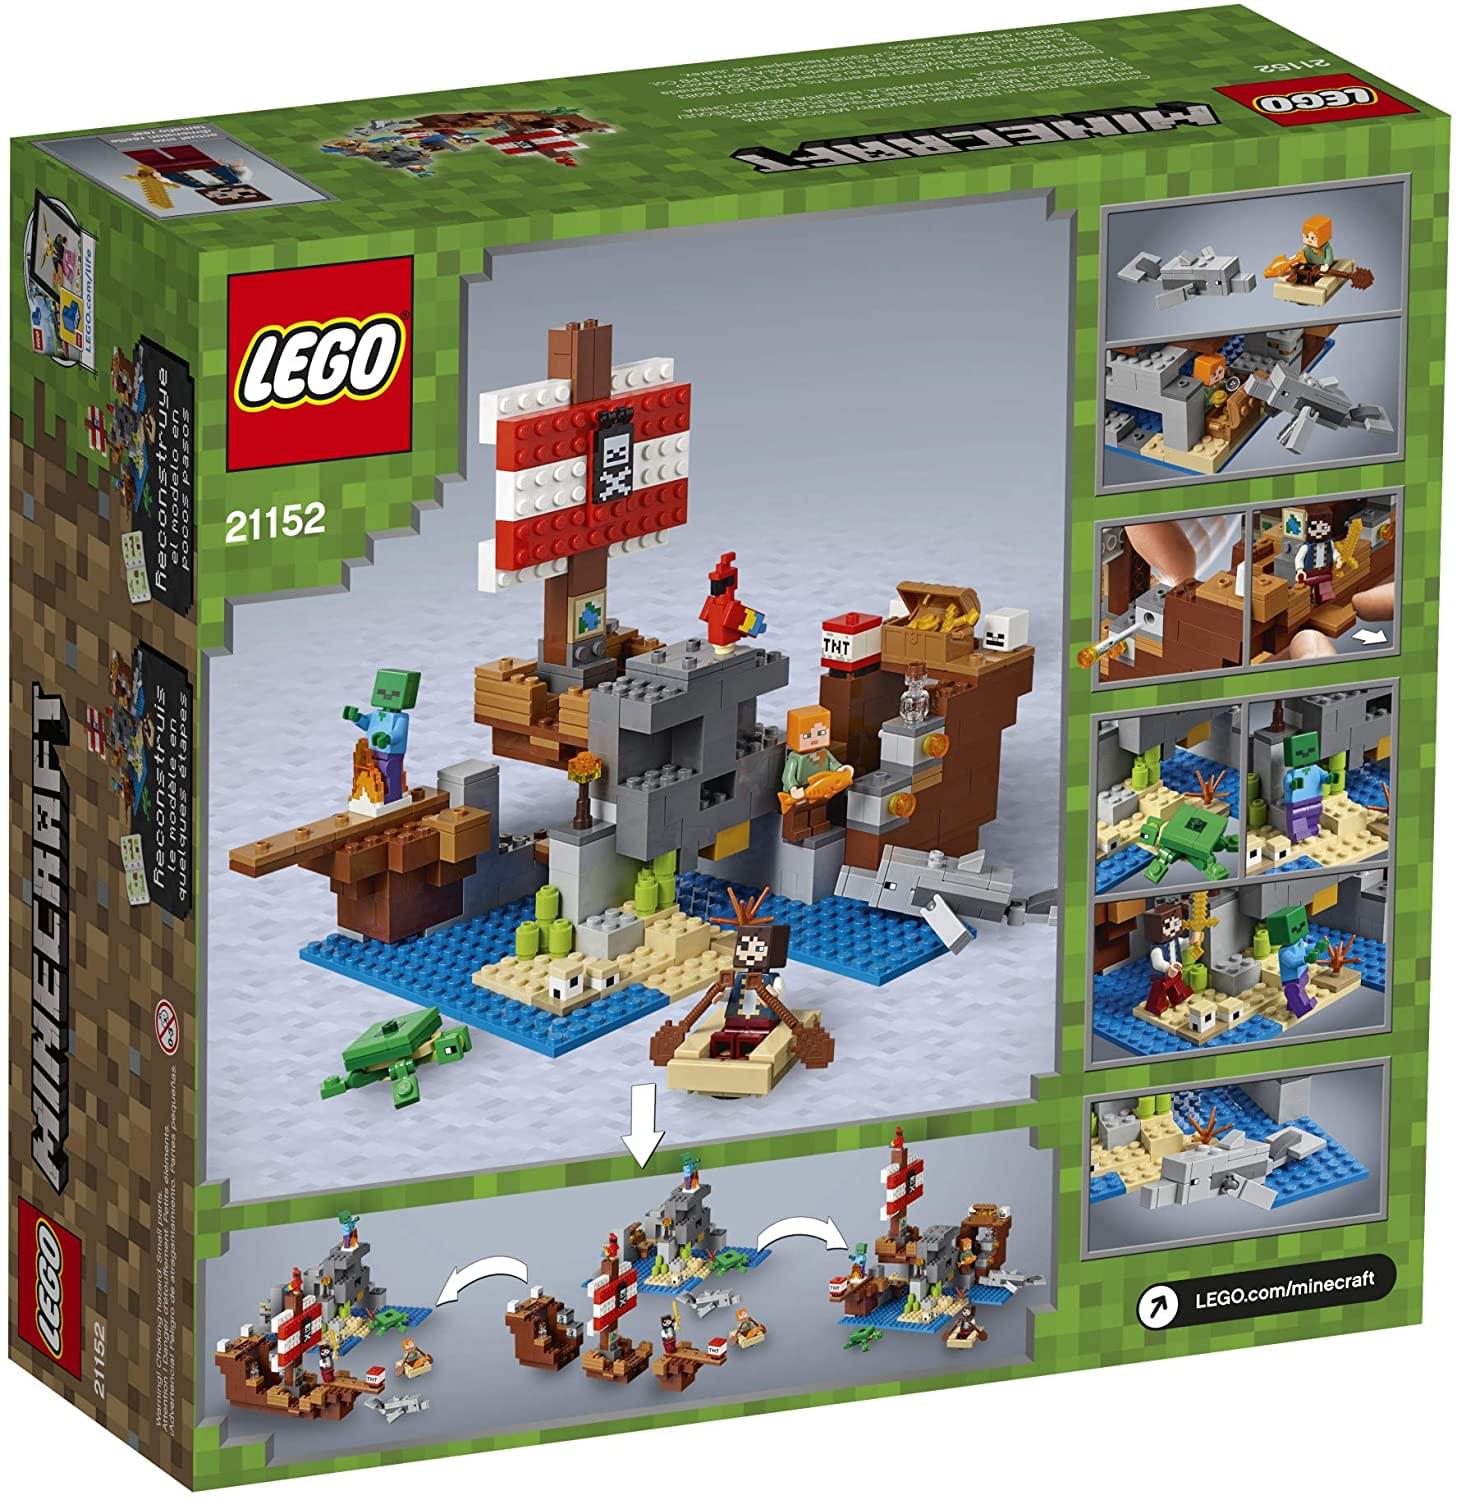 LEGO Minecraft The Pirate Ship Adventure 21152 | 386 Piece Building Kit